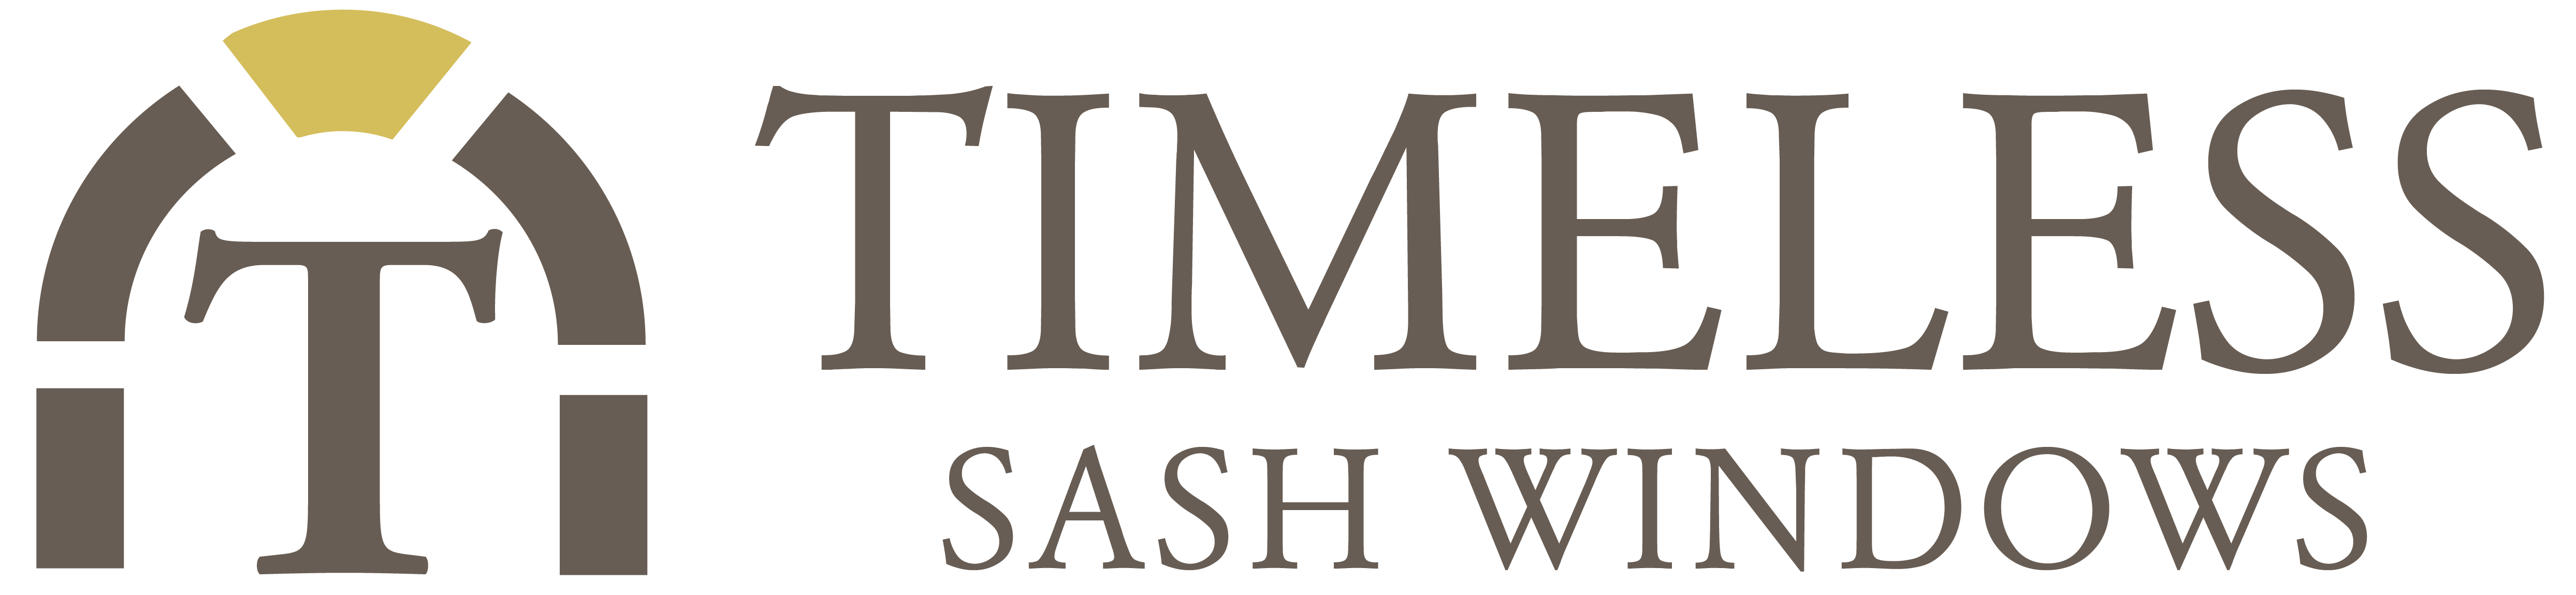 Timeless Sash Windows logo